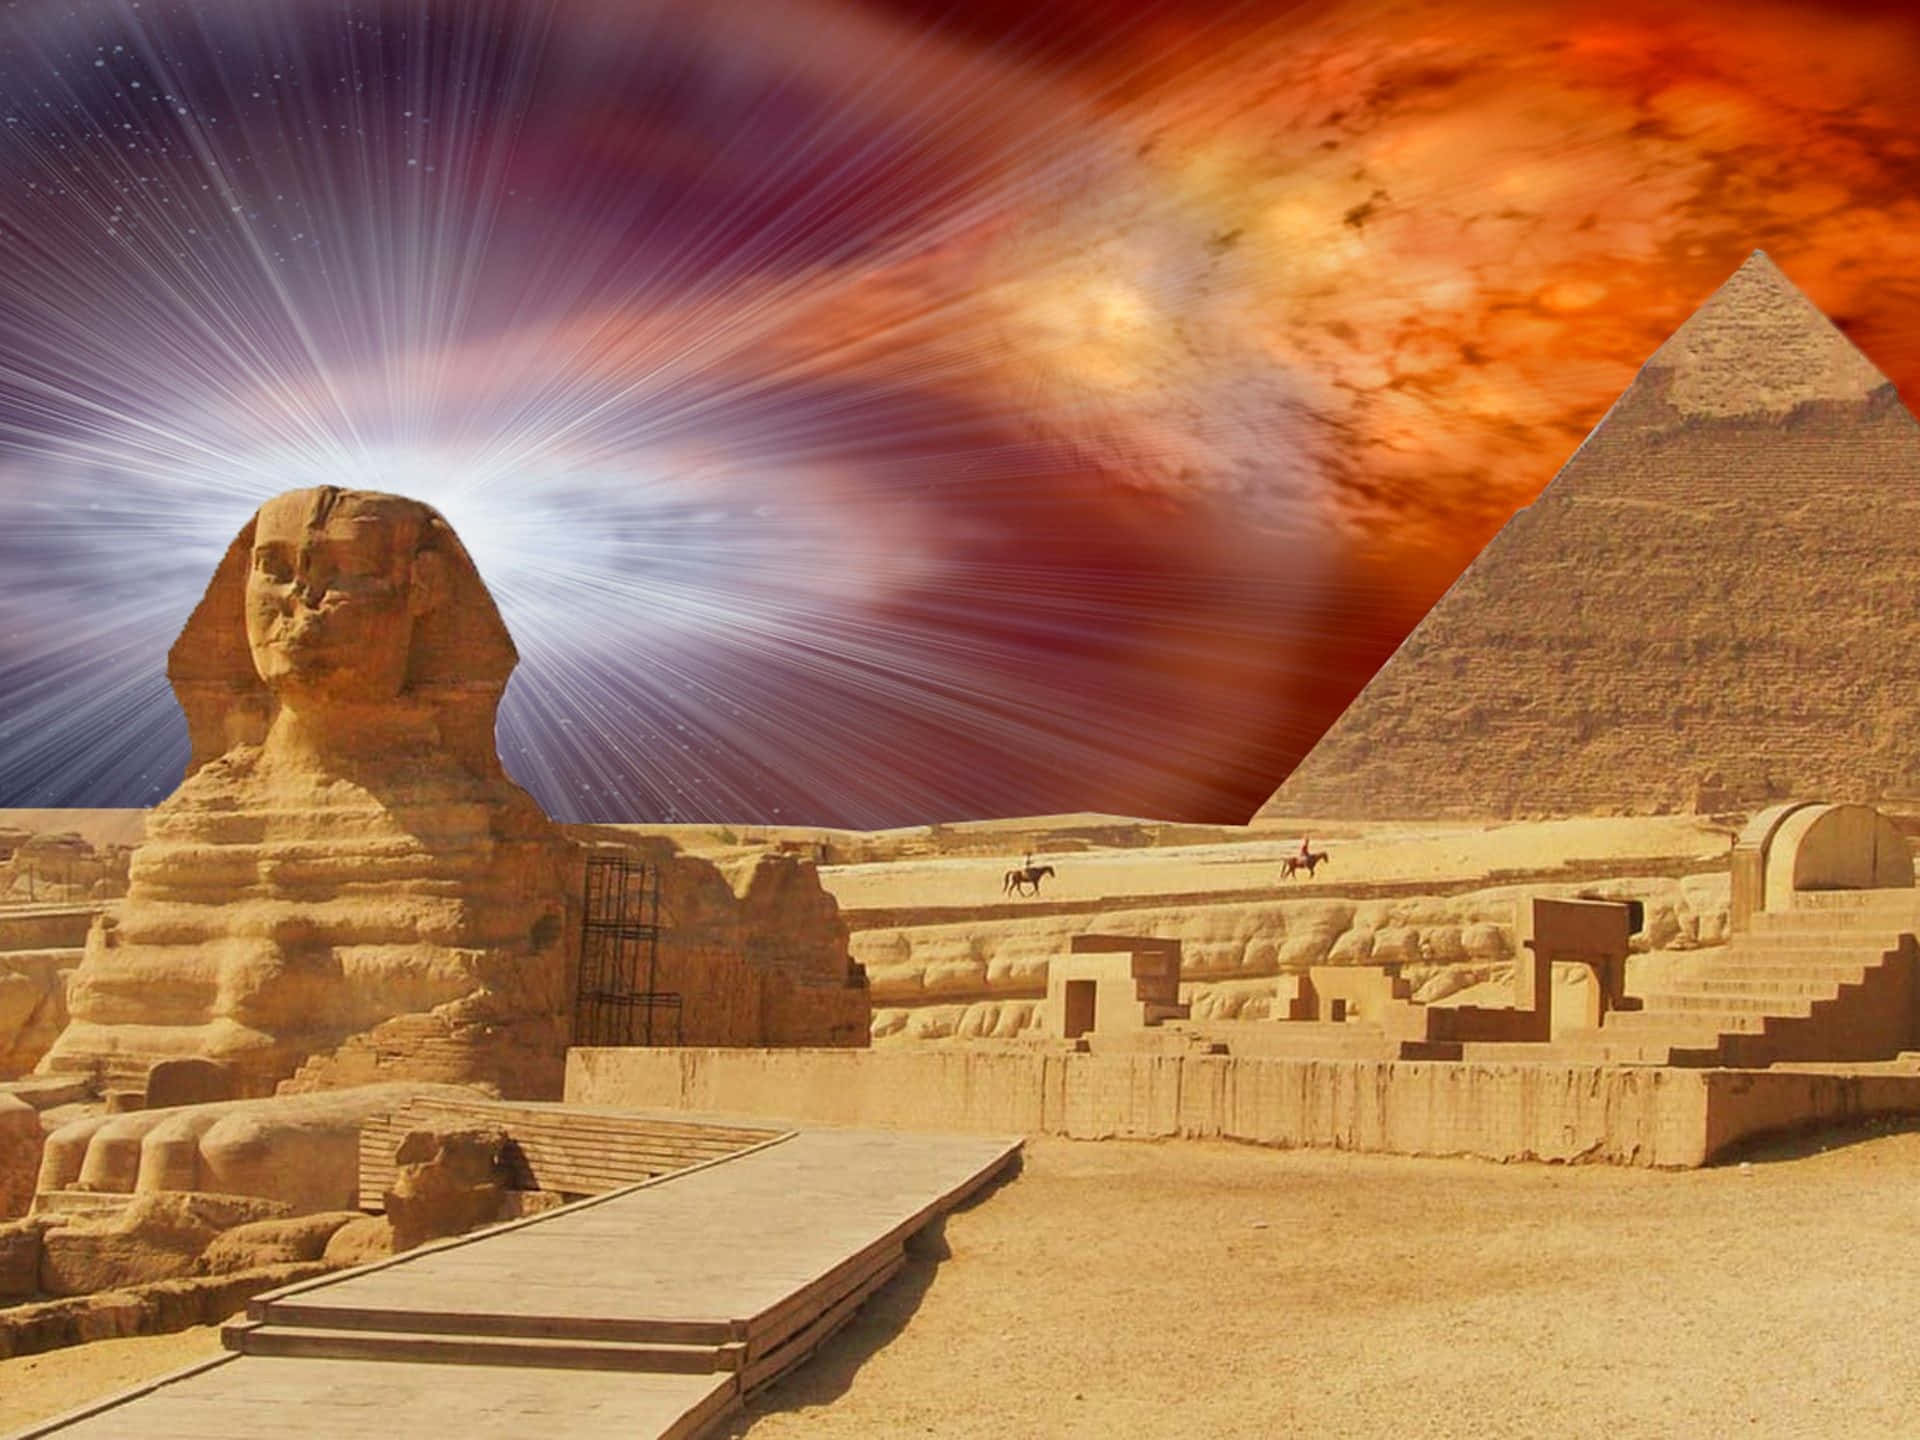 Giza Pyramids Digital Art Wallpaper